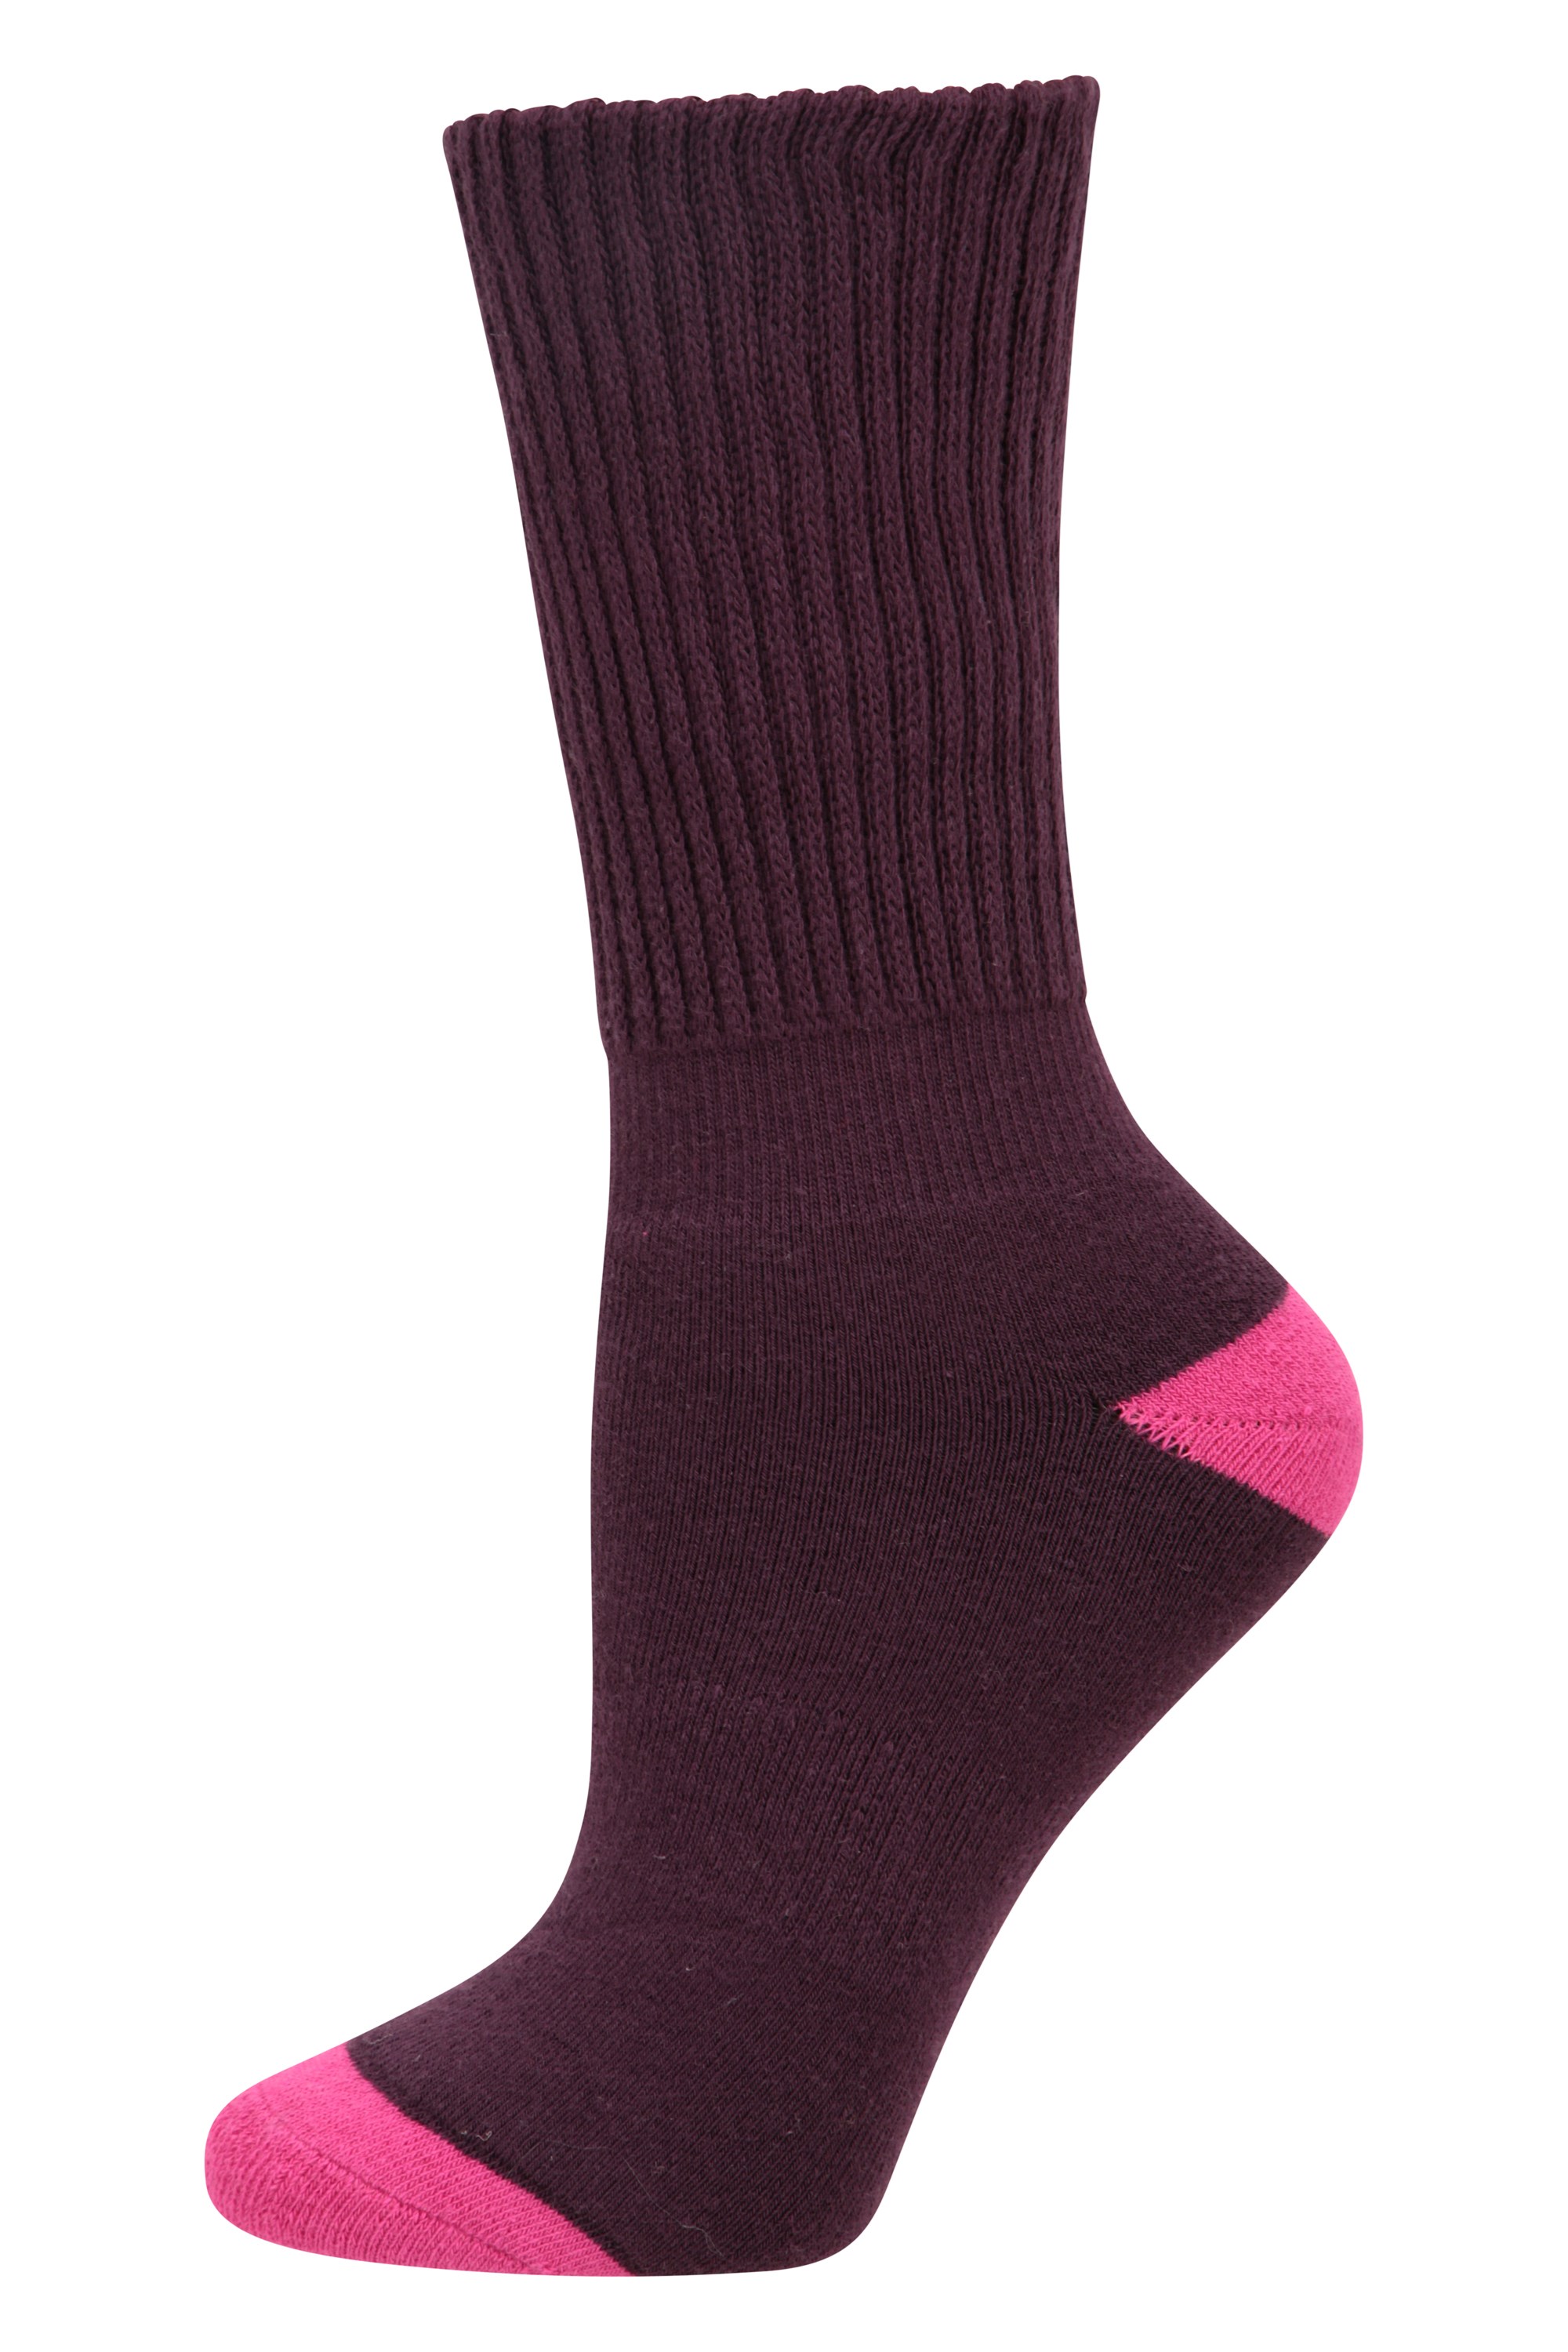 Mountain Warehouse Mountain Warehouse Womens Double Layer Walking Socks Ladies Antibacterial Sock 